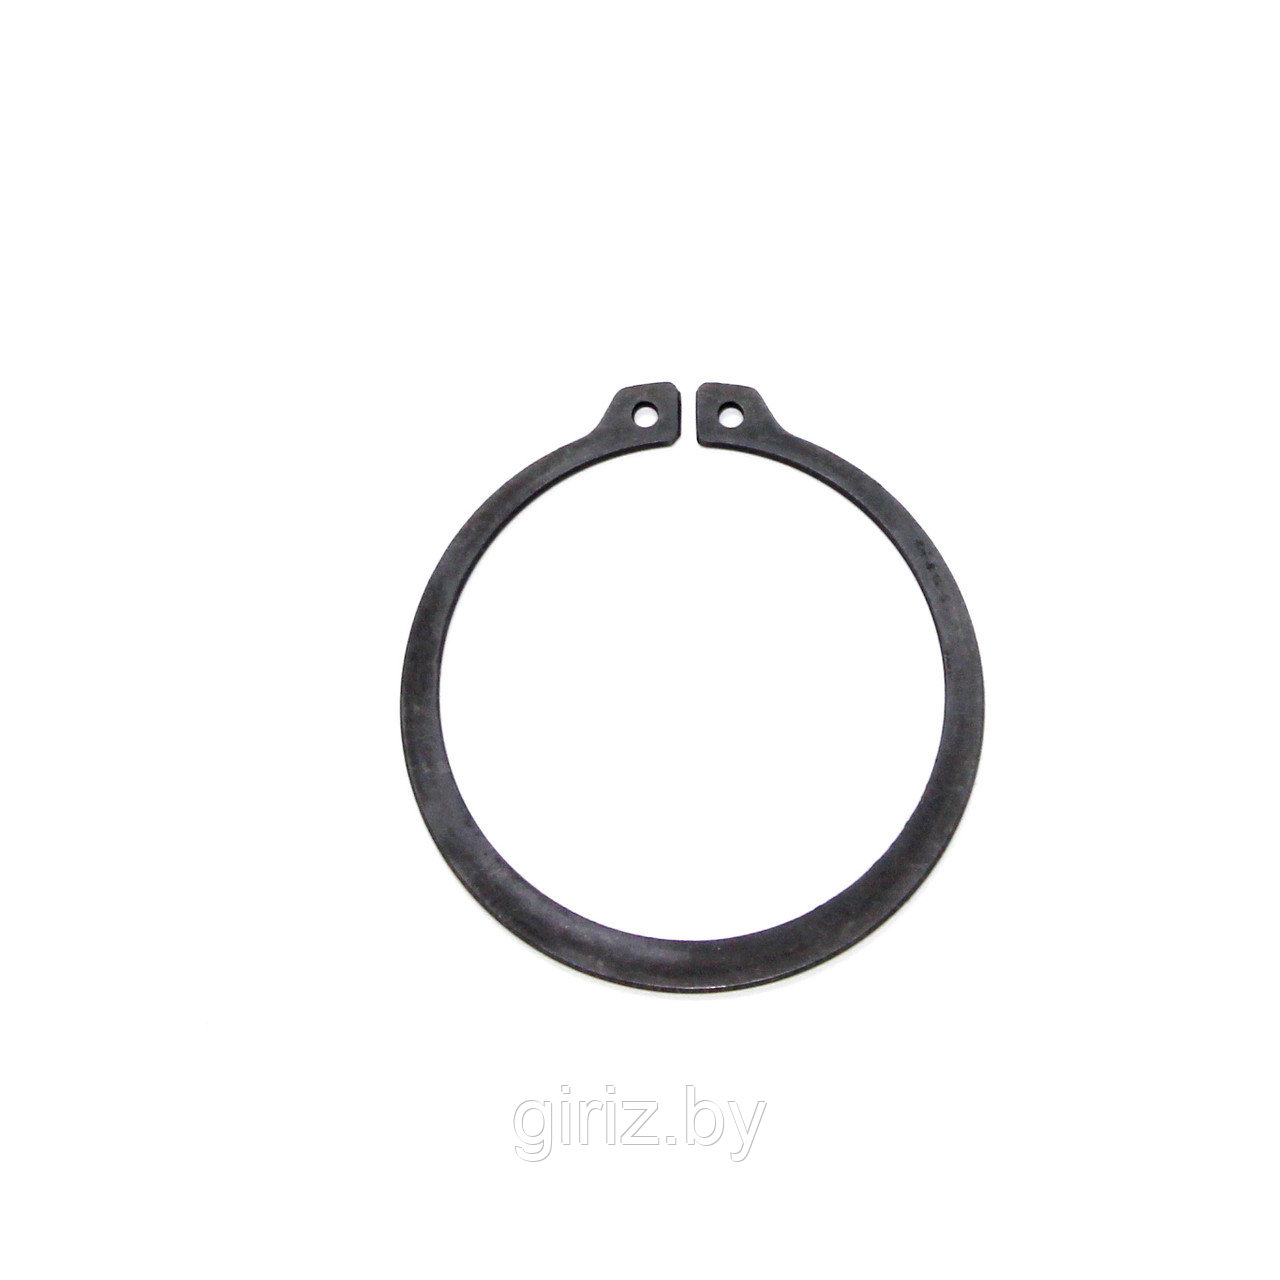 Стопорное кольцо ГОСТ 13942-86  95 мм (на вал, наружное, с ушками)